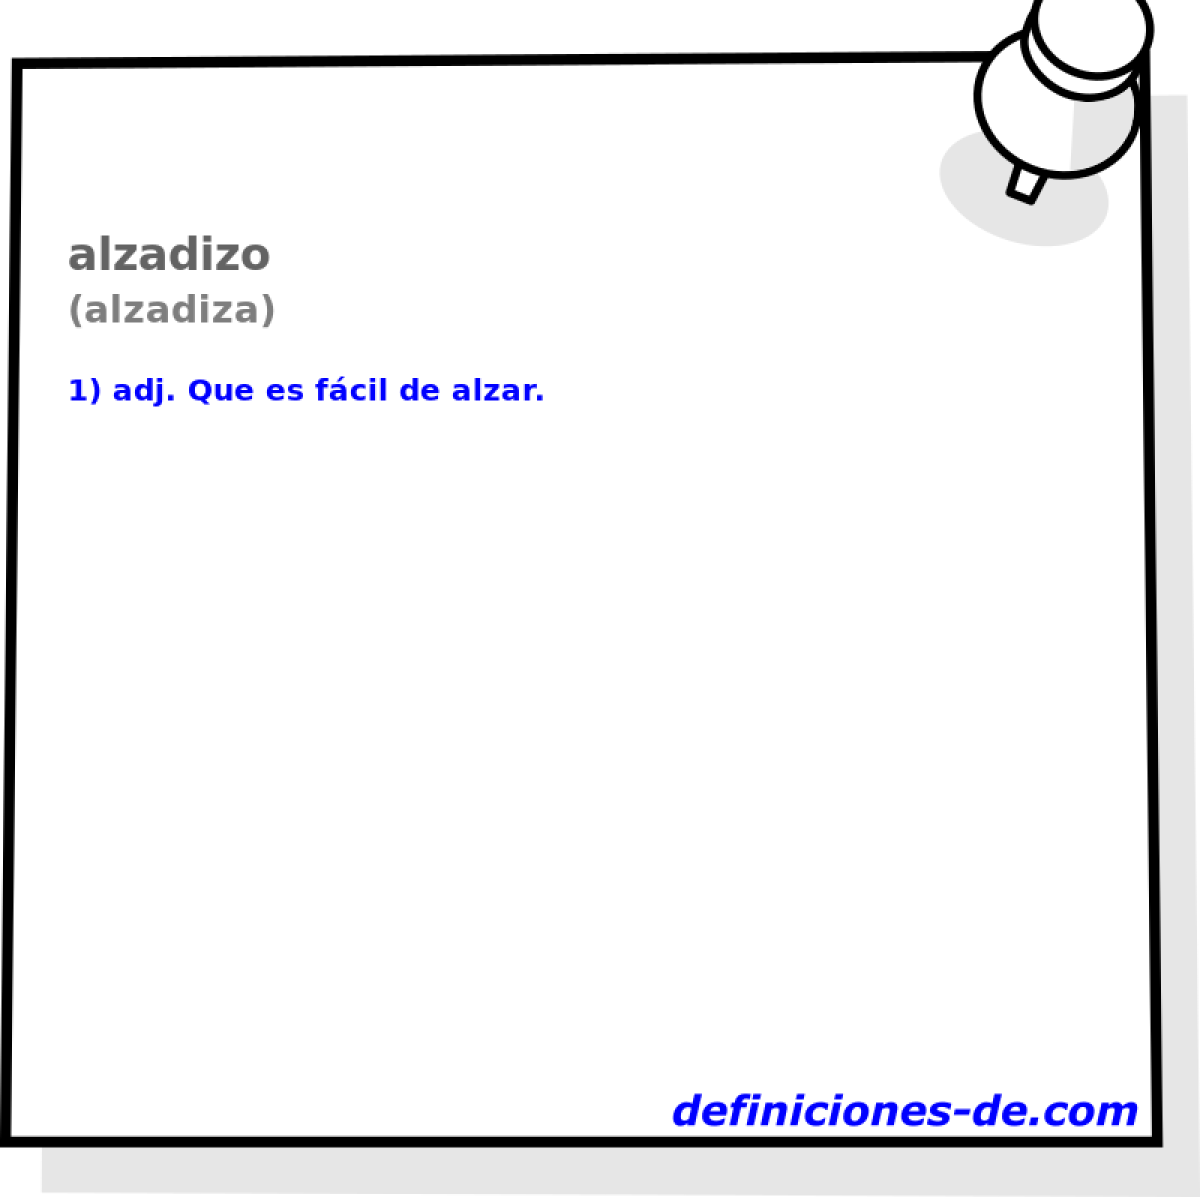 alzadizo (alzadiza)